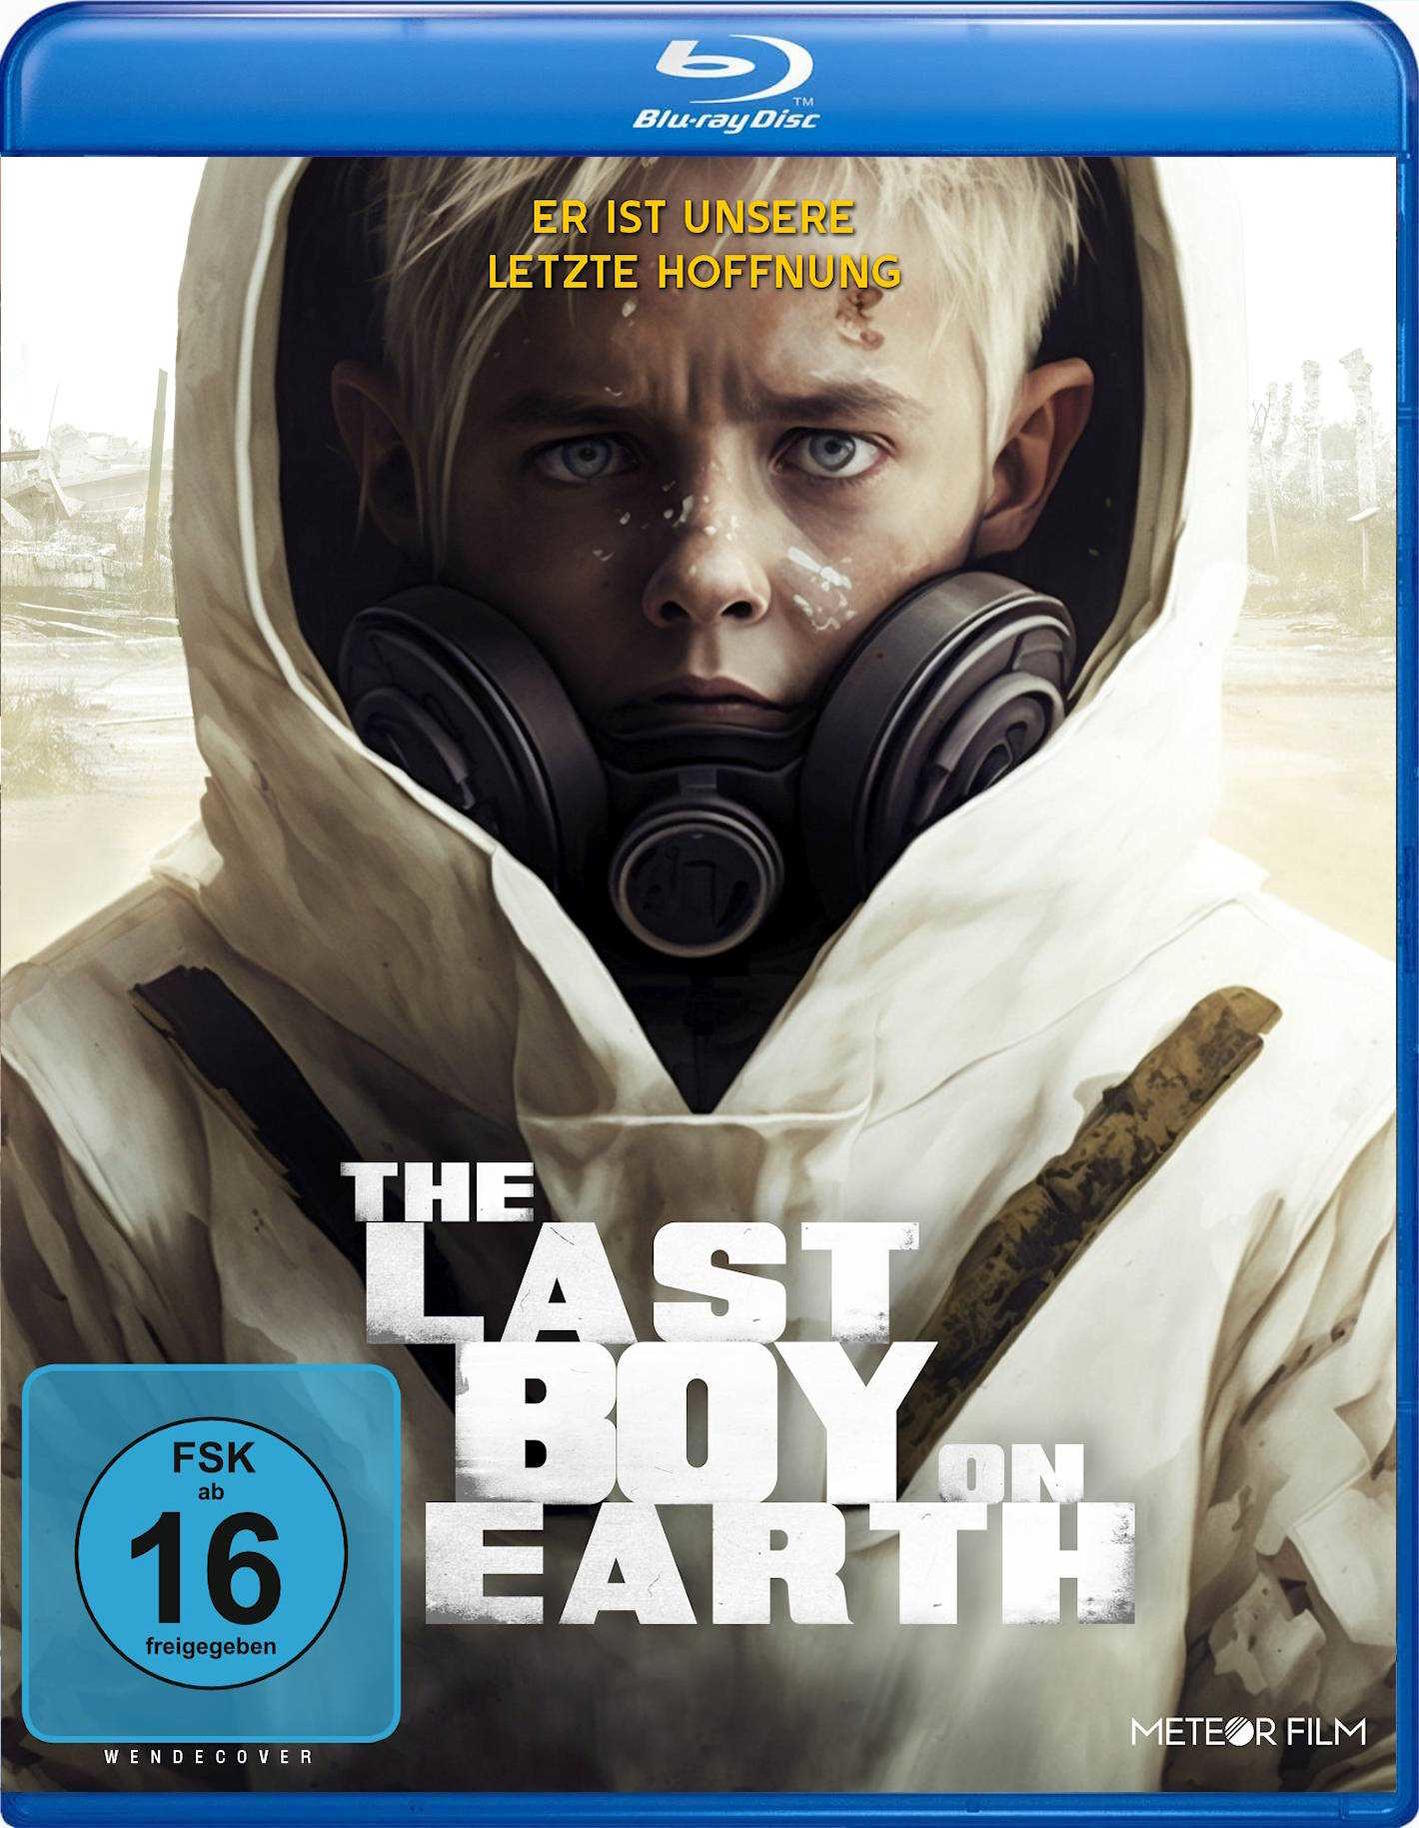 The Last Boy on Earth Blu-ray